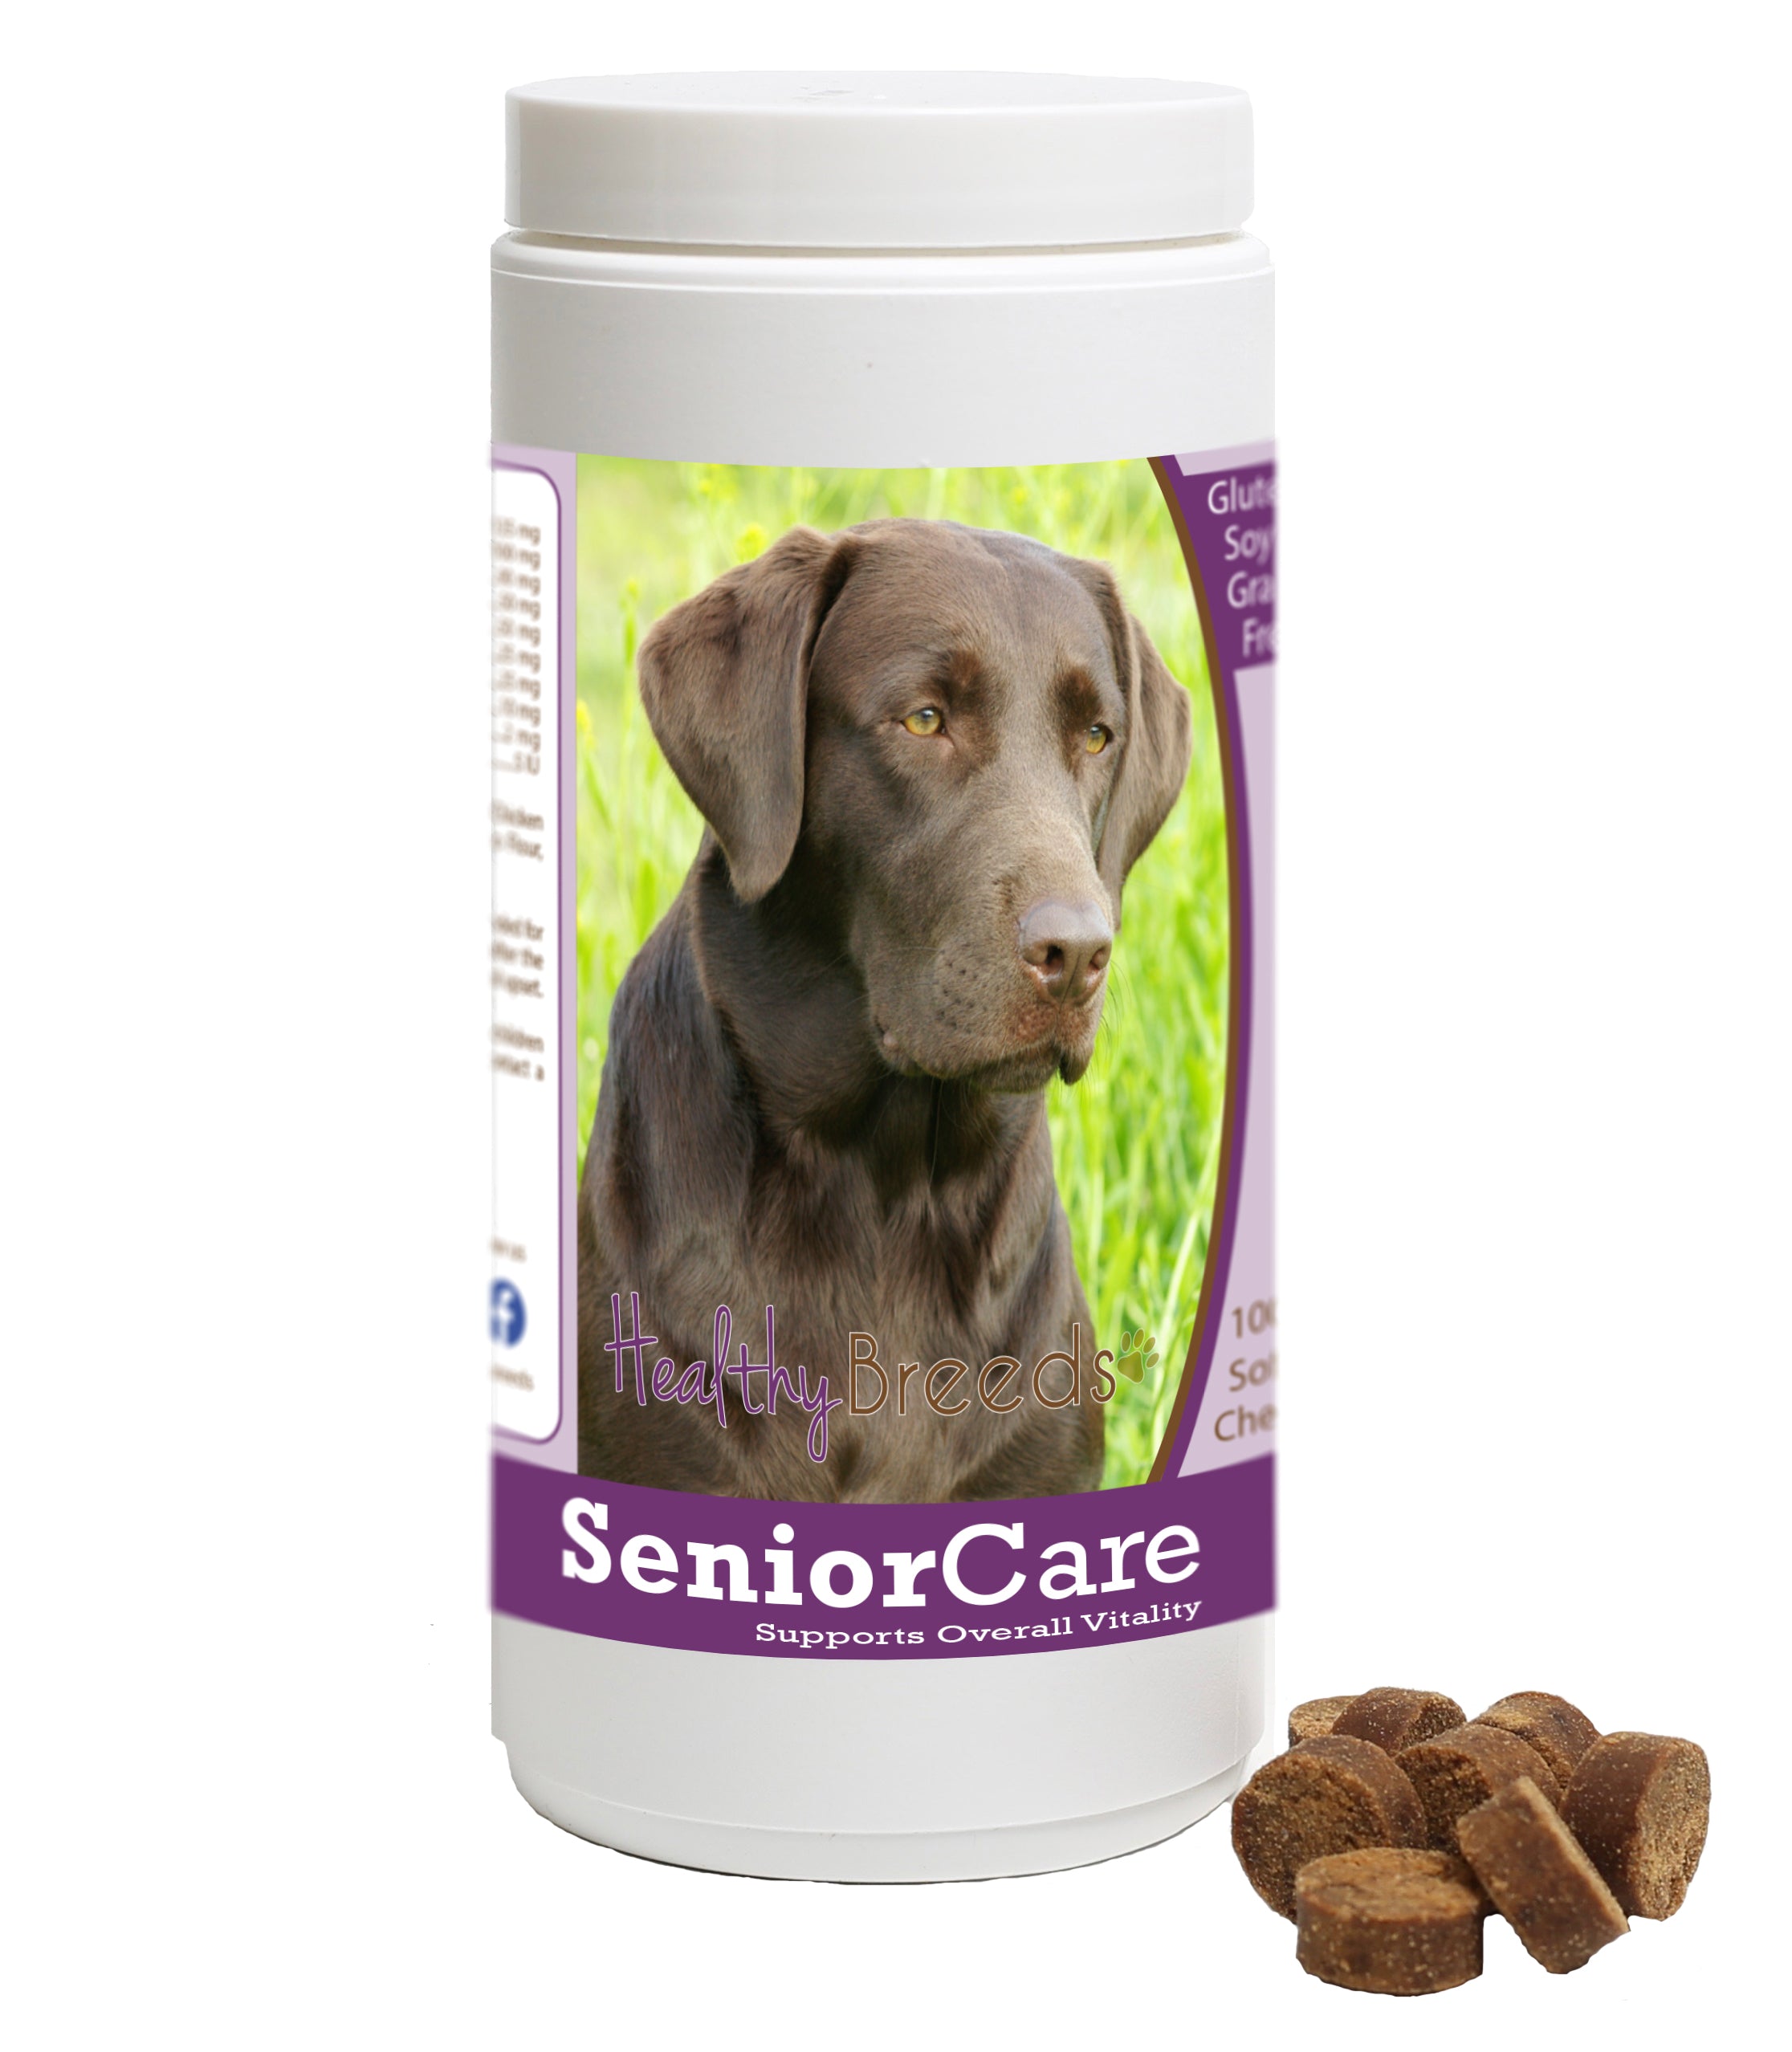 Healthy Breeds Senior Dog Care Soft Chews - Yorkshire Terrier